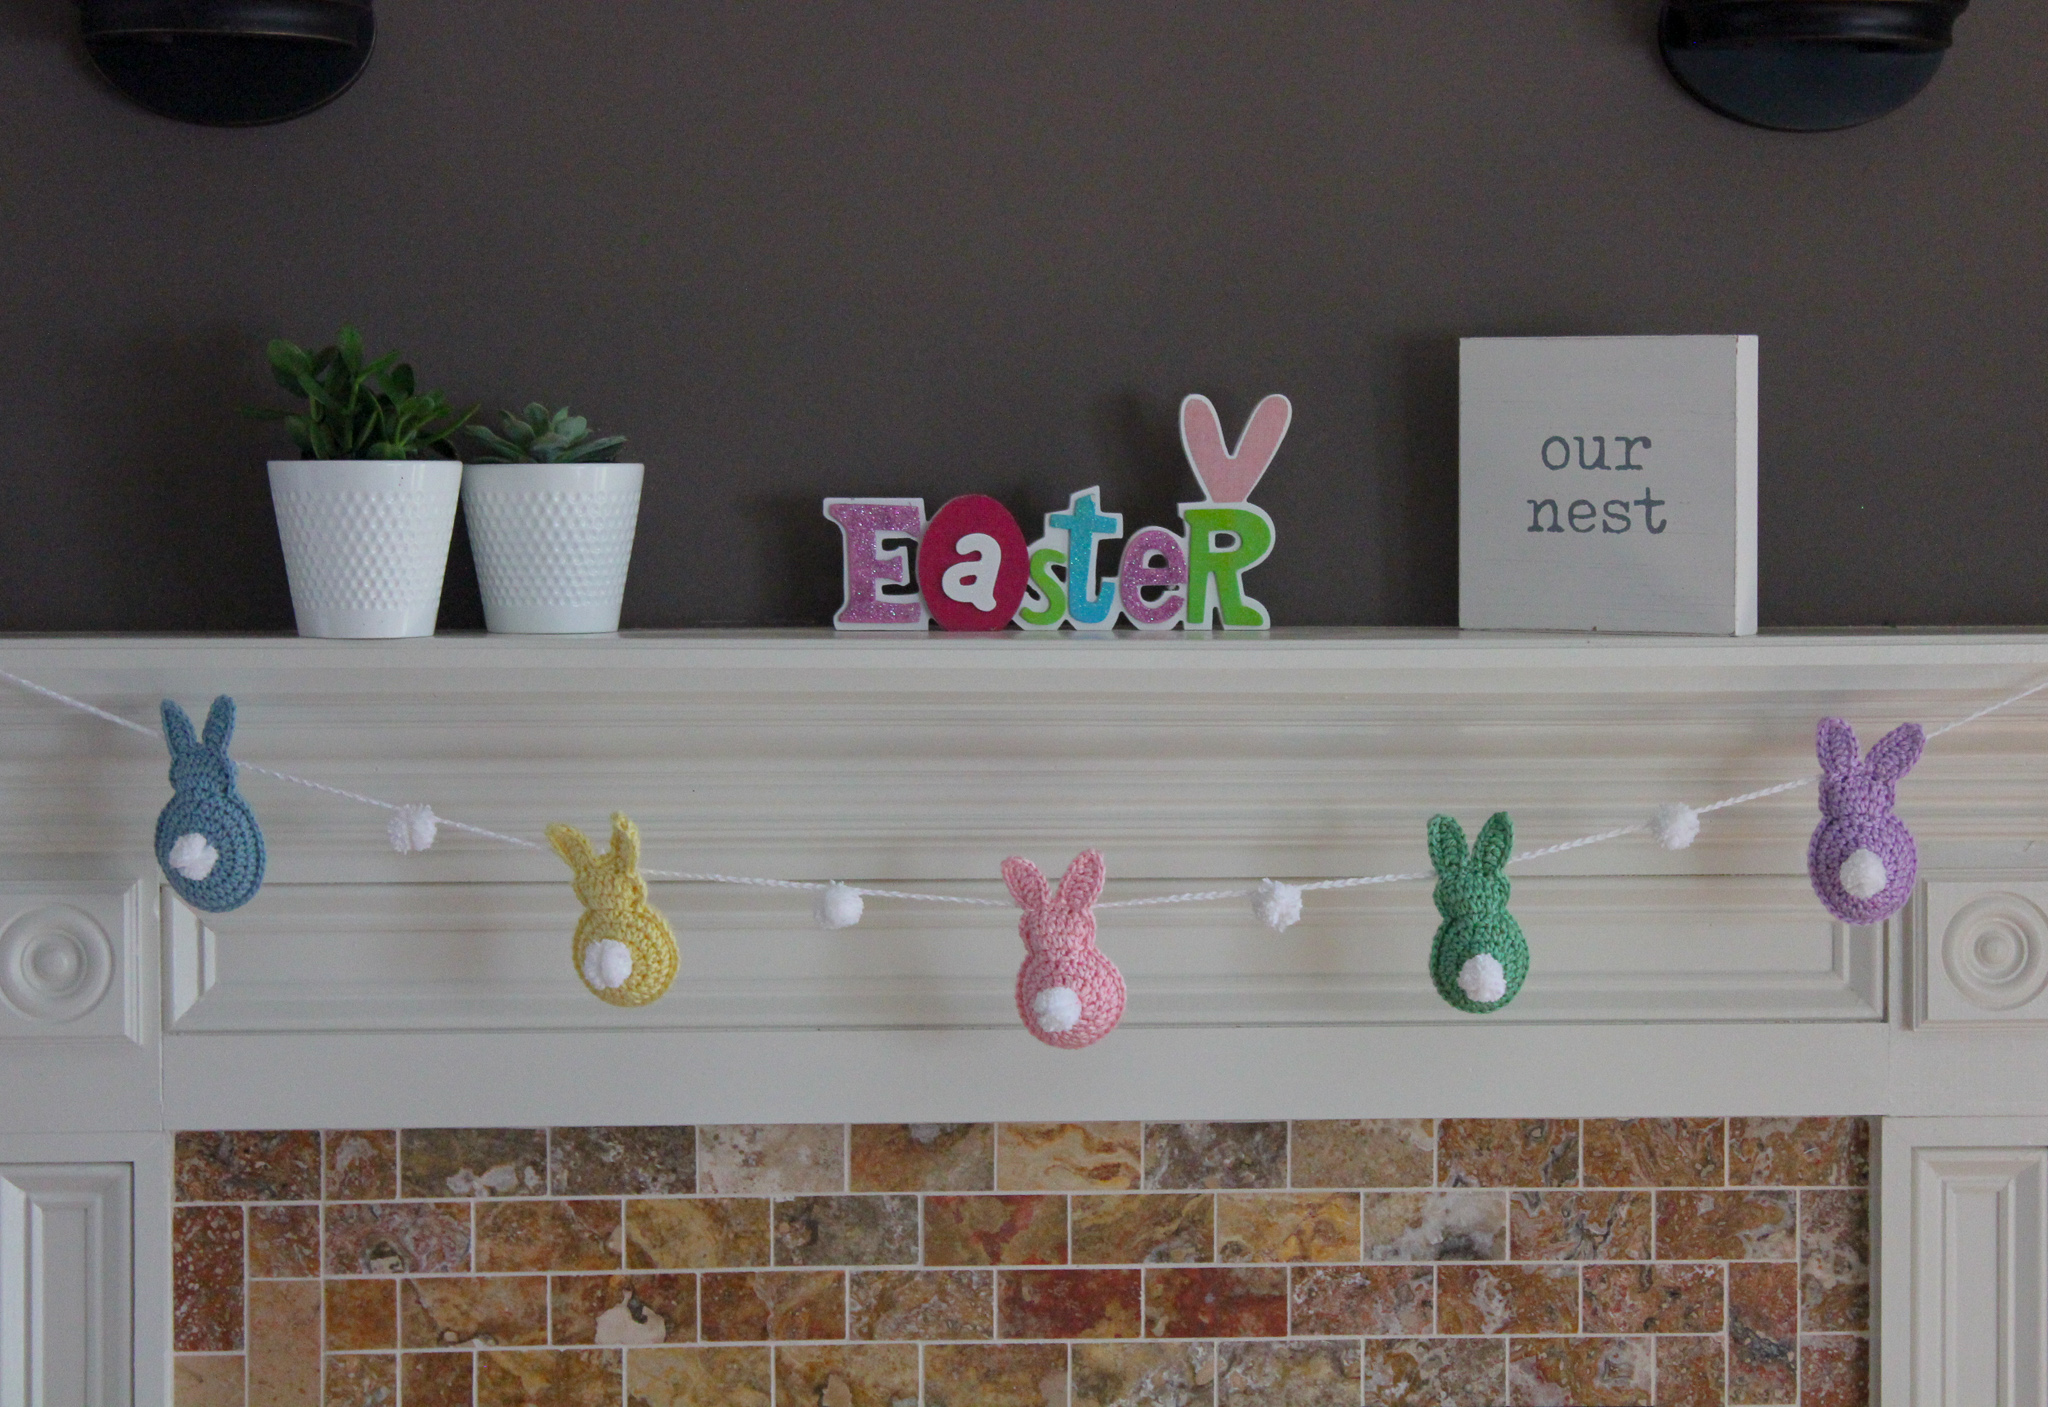 DIY Modern Bunny Wall Decor - Perfect for Easter or a Nursery!